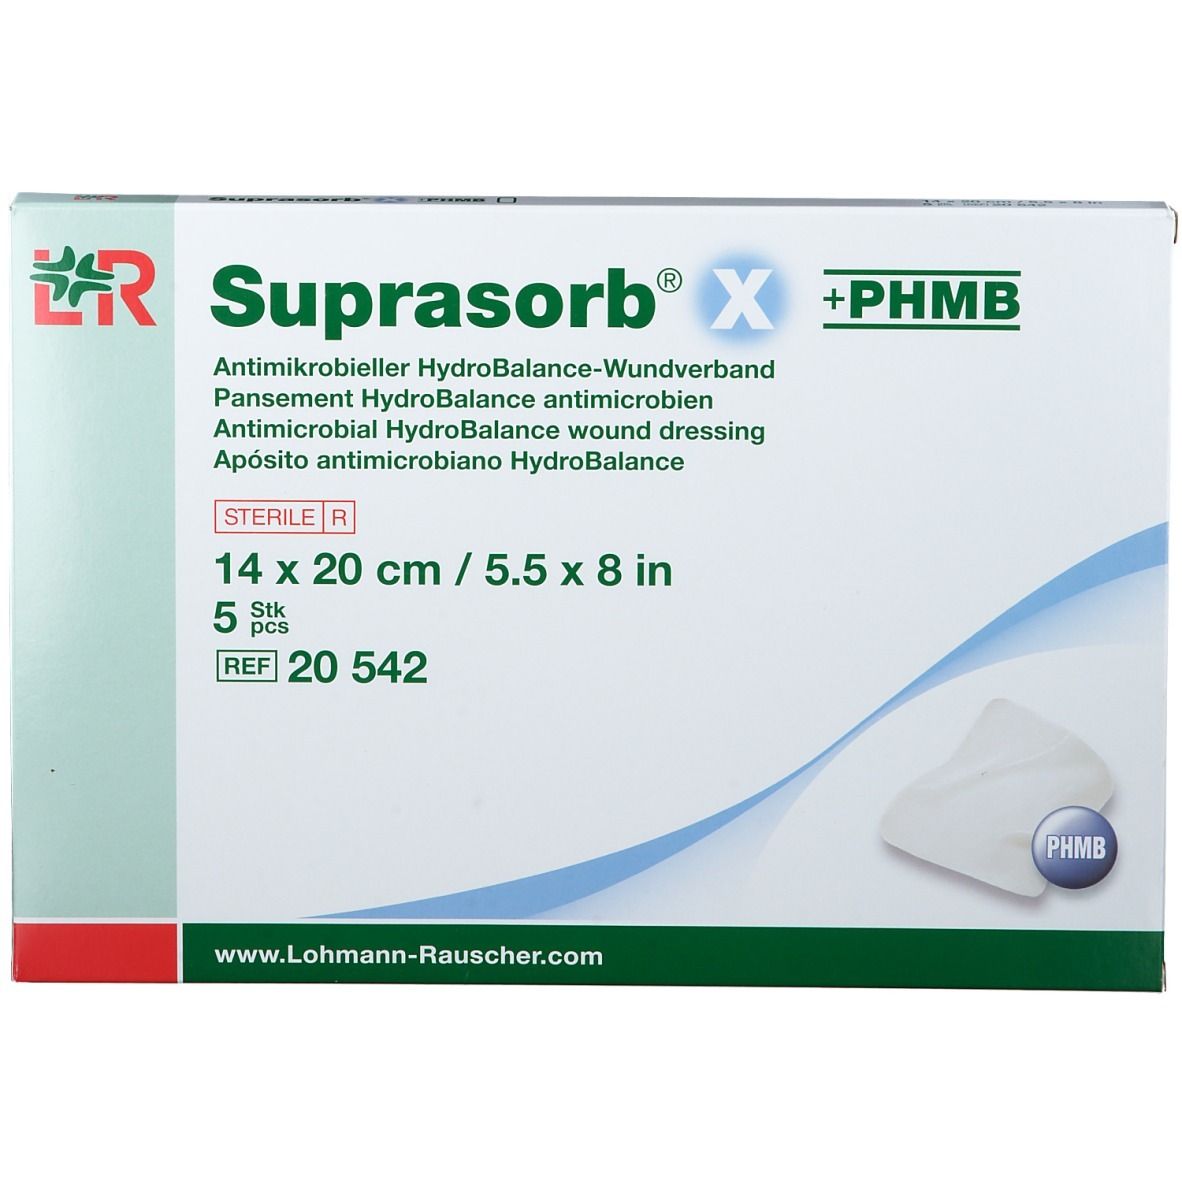 Suprasorb® X + PHMB 14 cm x 20 cm